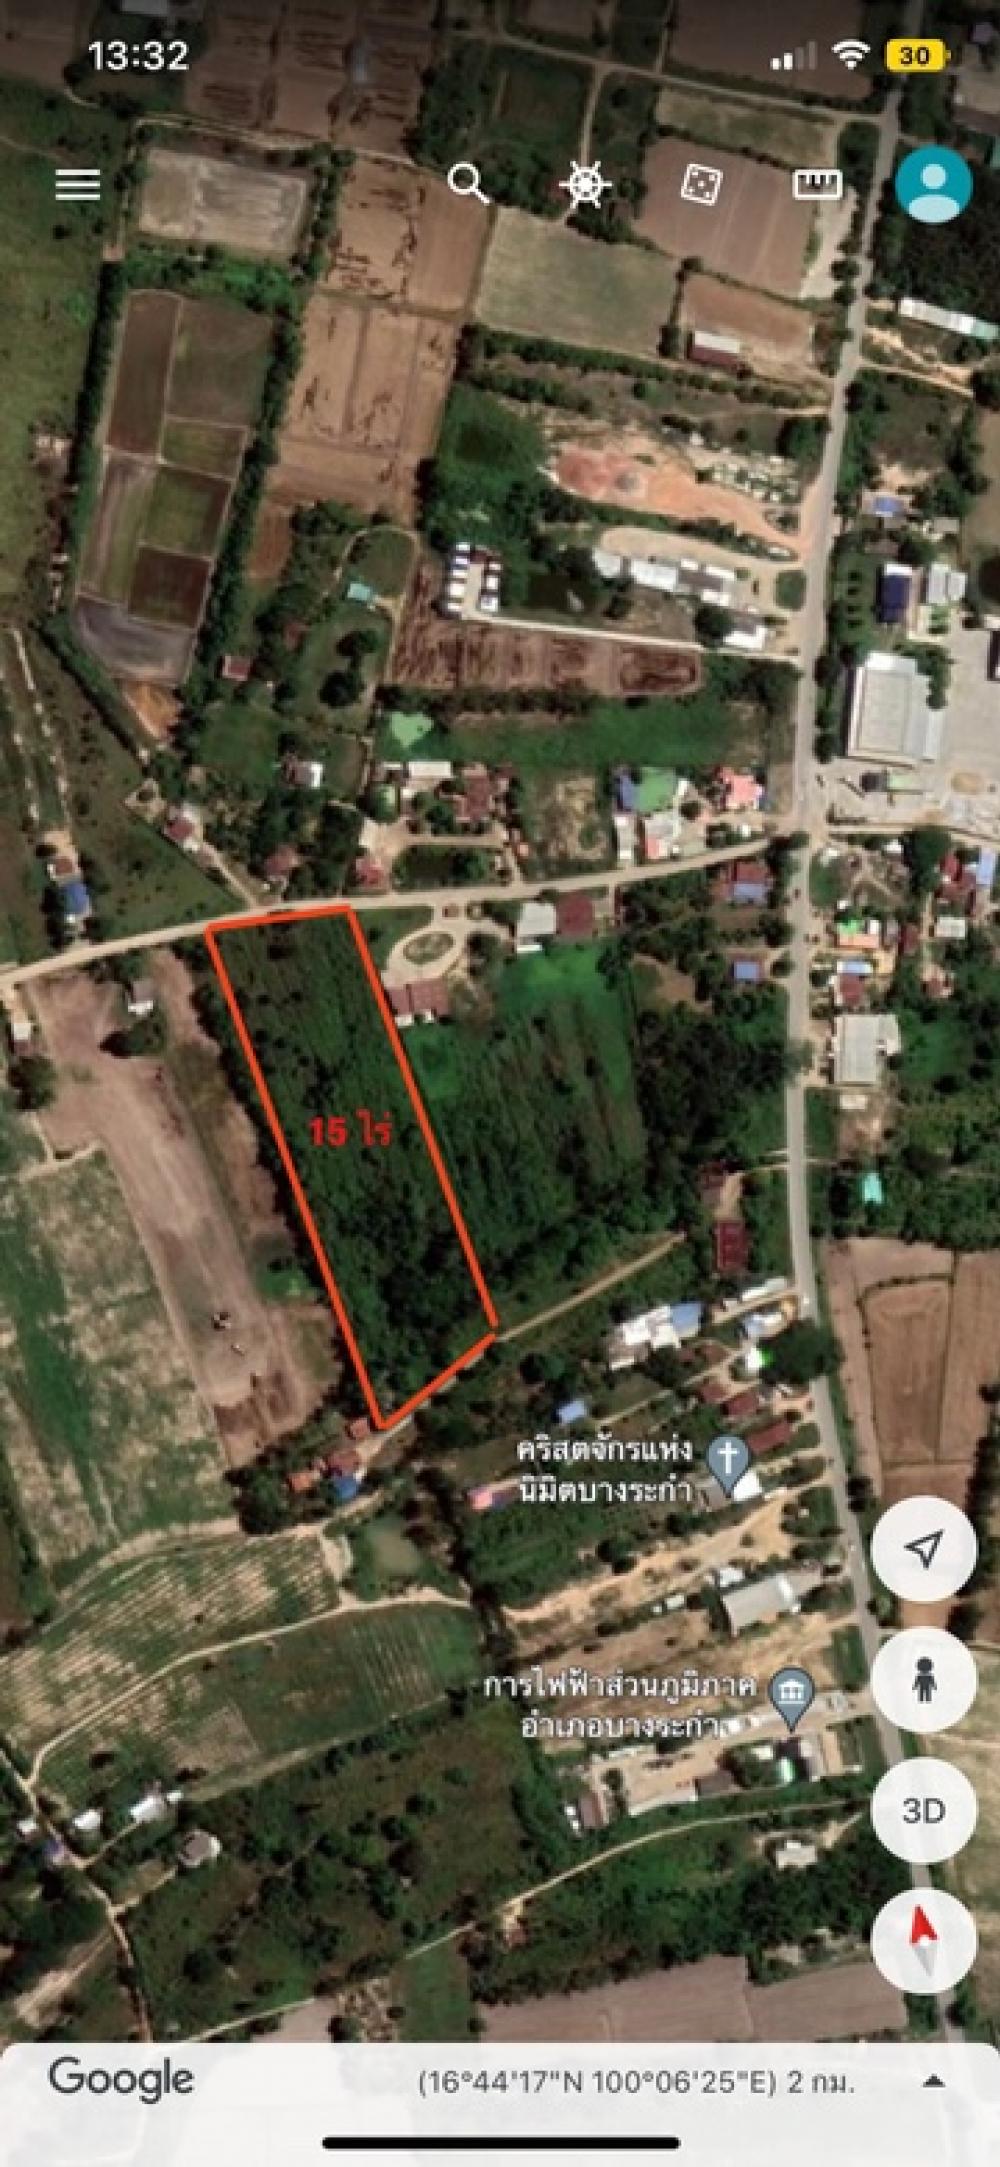 For SaleLandPhitsanulok : Land for sale, Bang Rakam District, Phitsanulok Province, 15 rai, about 100 meters wide, not flooded.